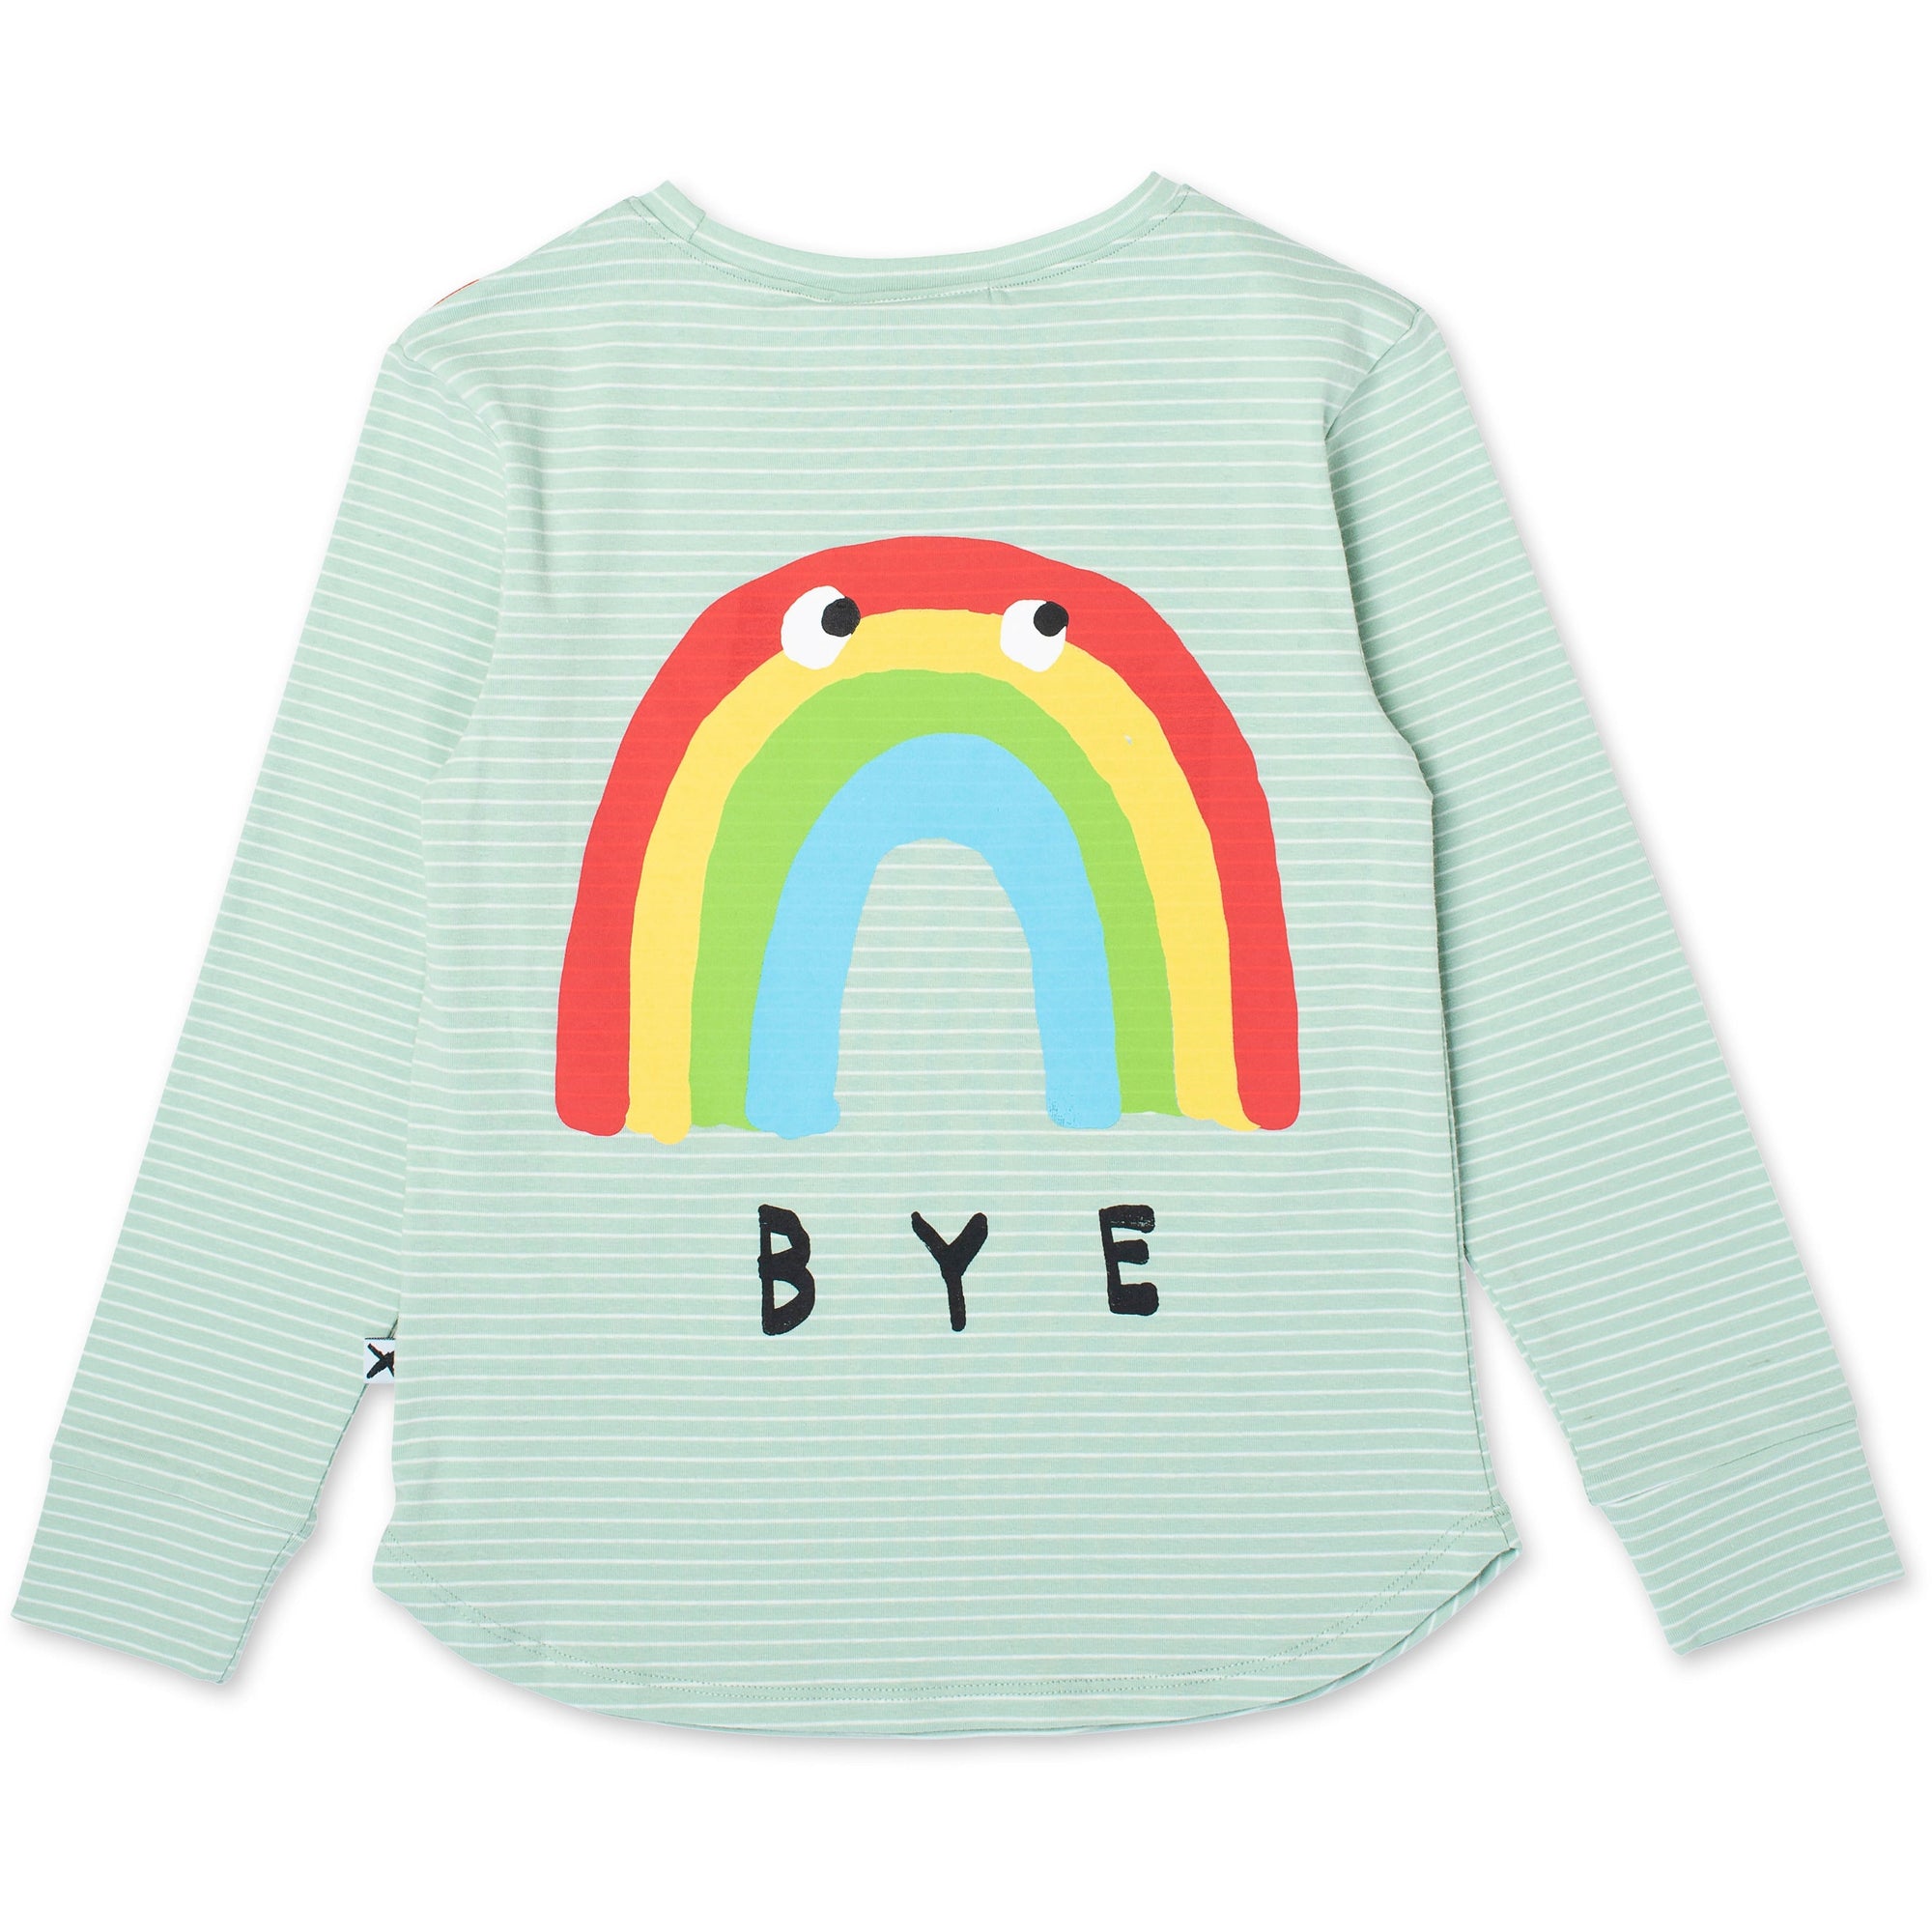 Hello Bye Rainbow Tee - Mint Stripe